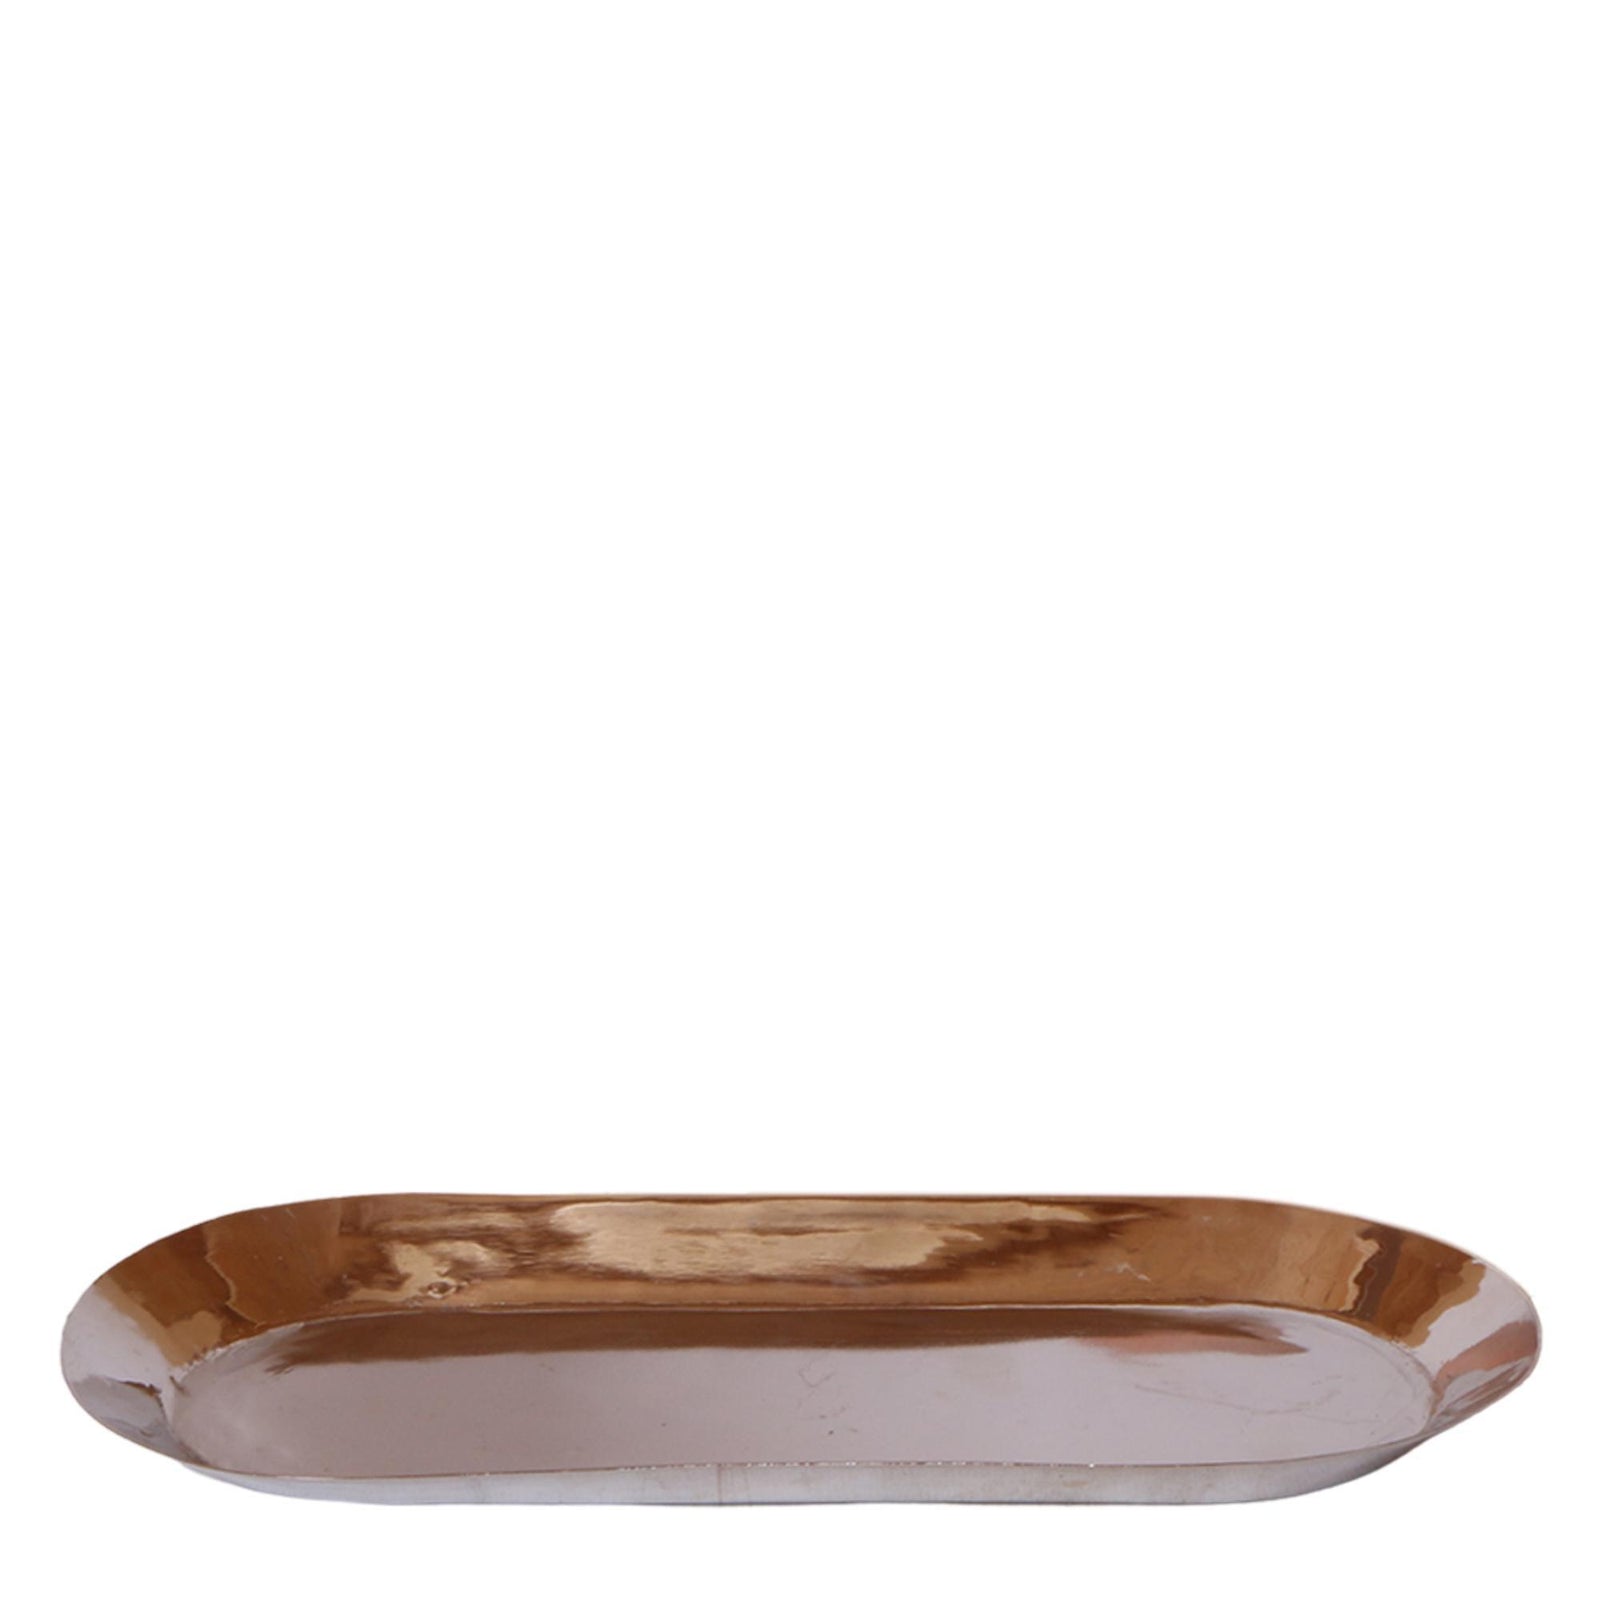 Kolibri Home | Plate oval -  Zilveren ovale dienblad Ø30cm